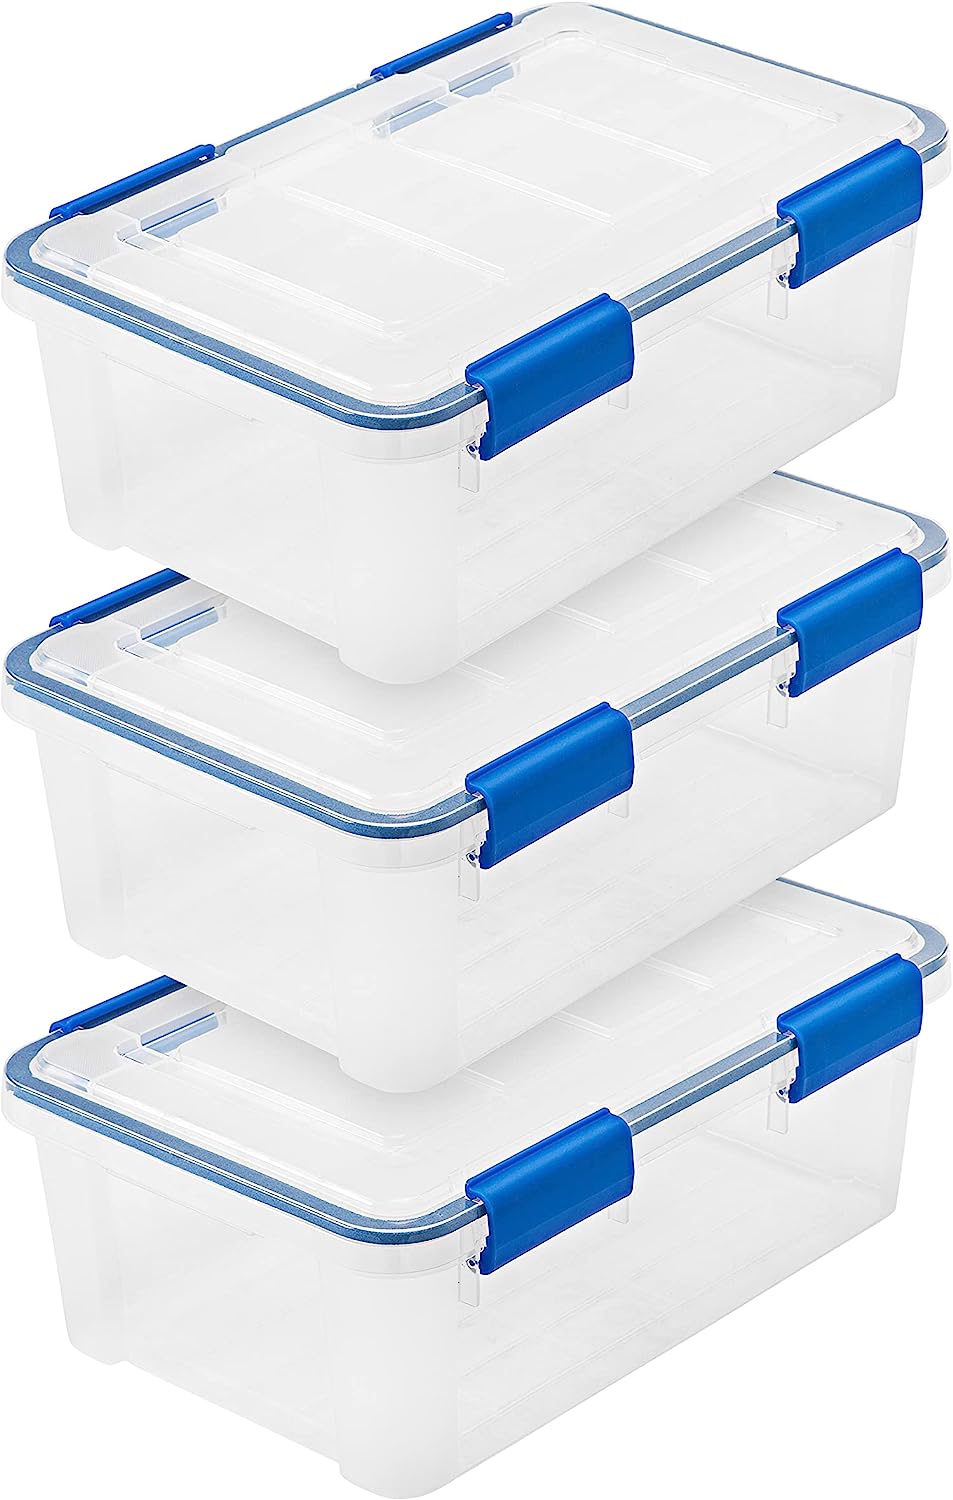 Iris Weathertight Multi-Purpose Storage Box, 44 Quart, Clear, 2 Pack